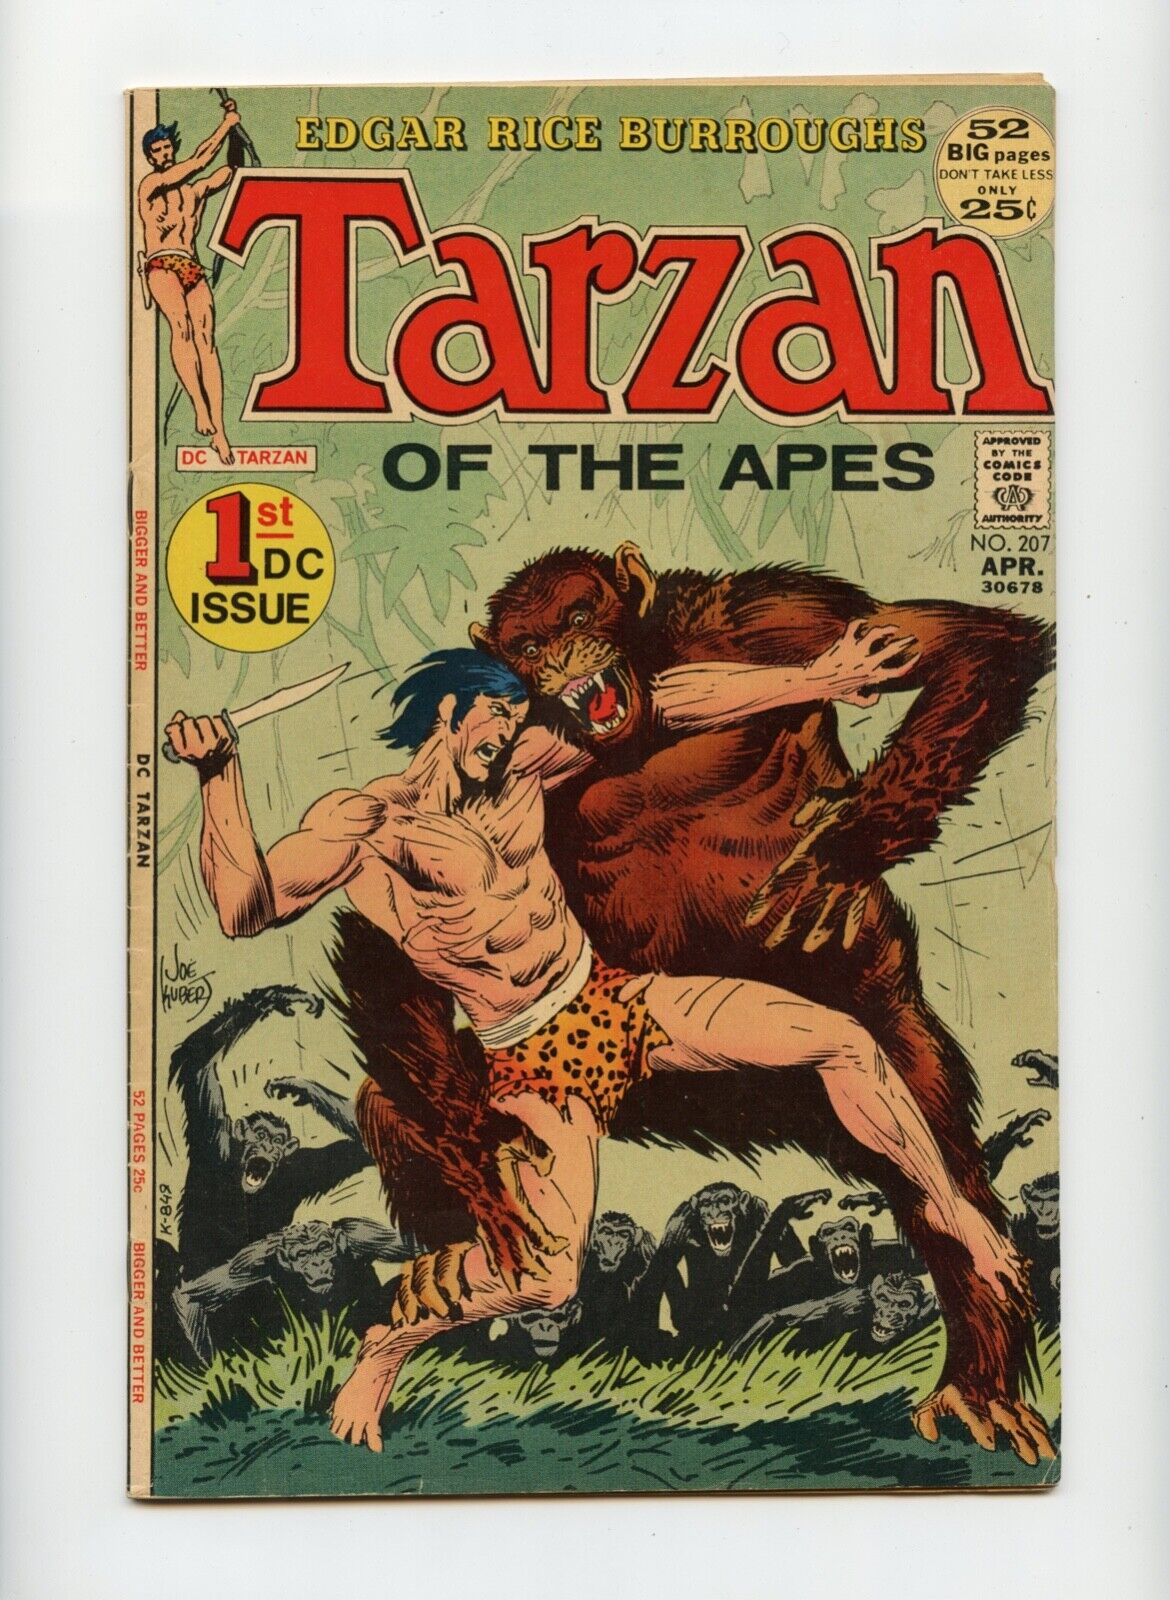 Tarzan of the Apes #207 April 1972 - 1st DC Issue Tarzan comic book